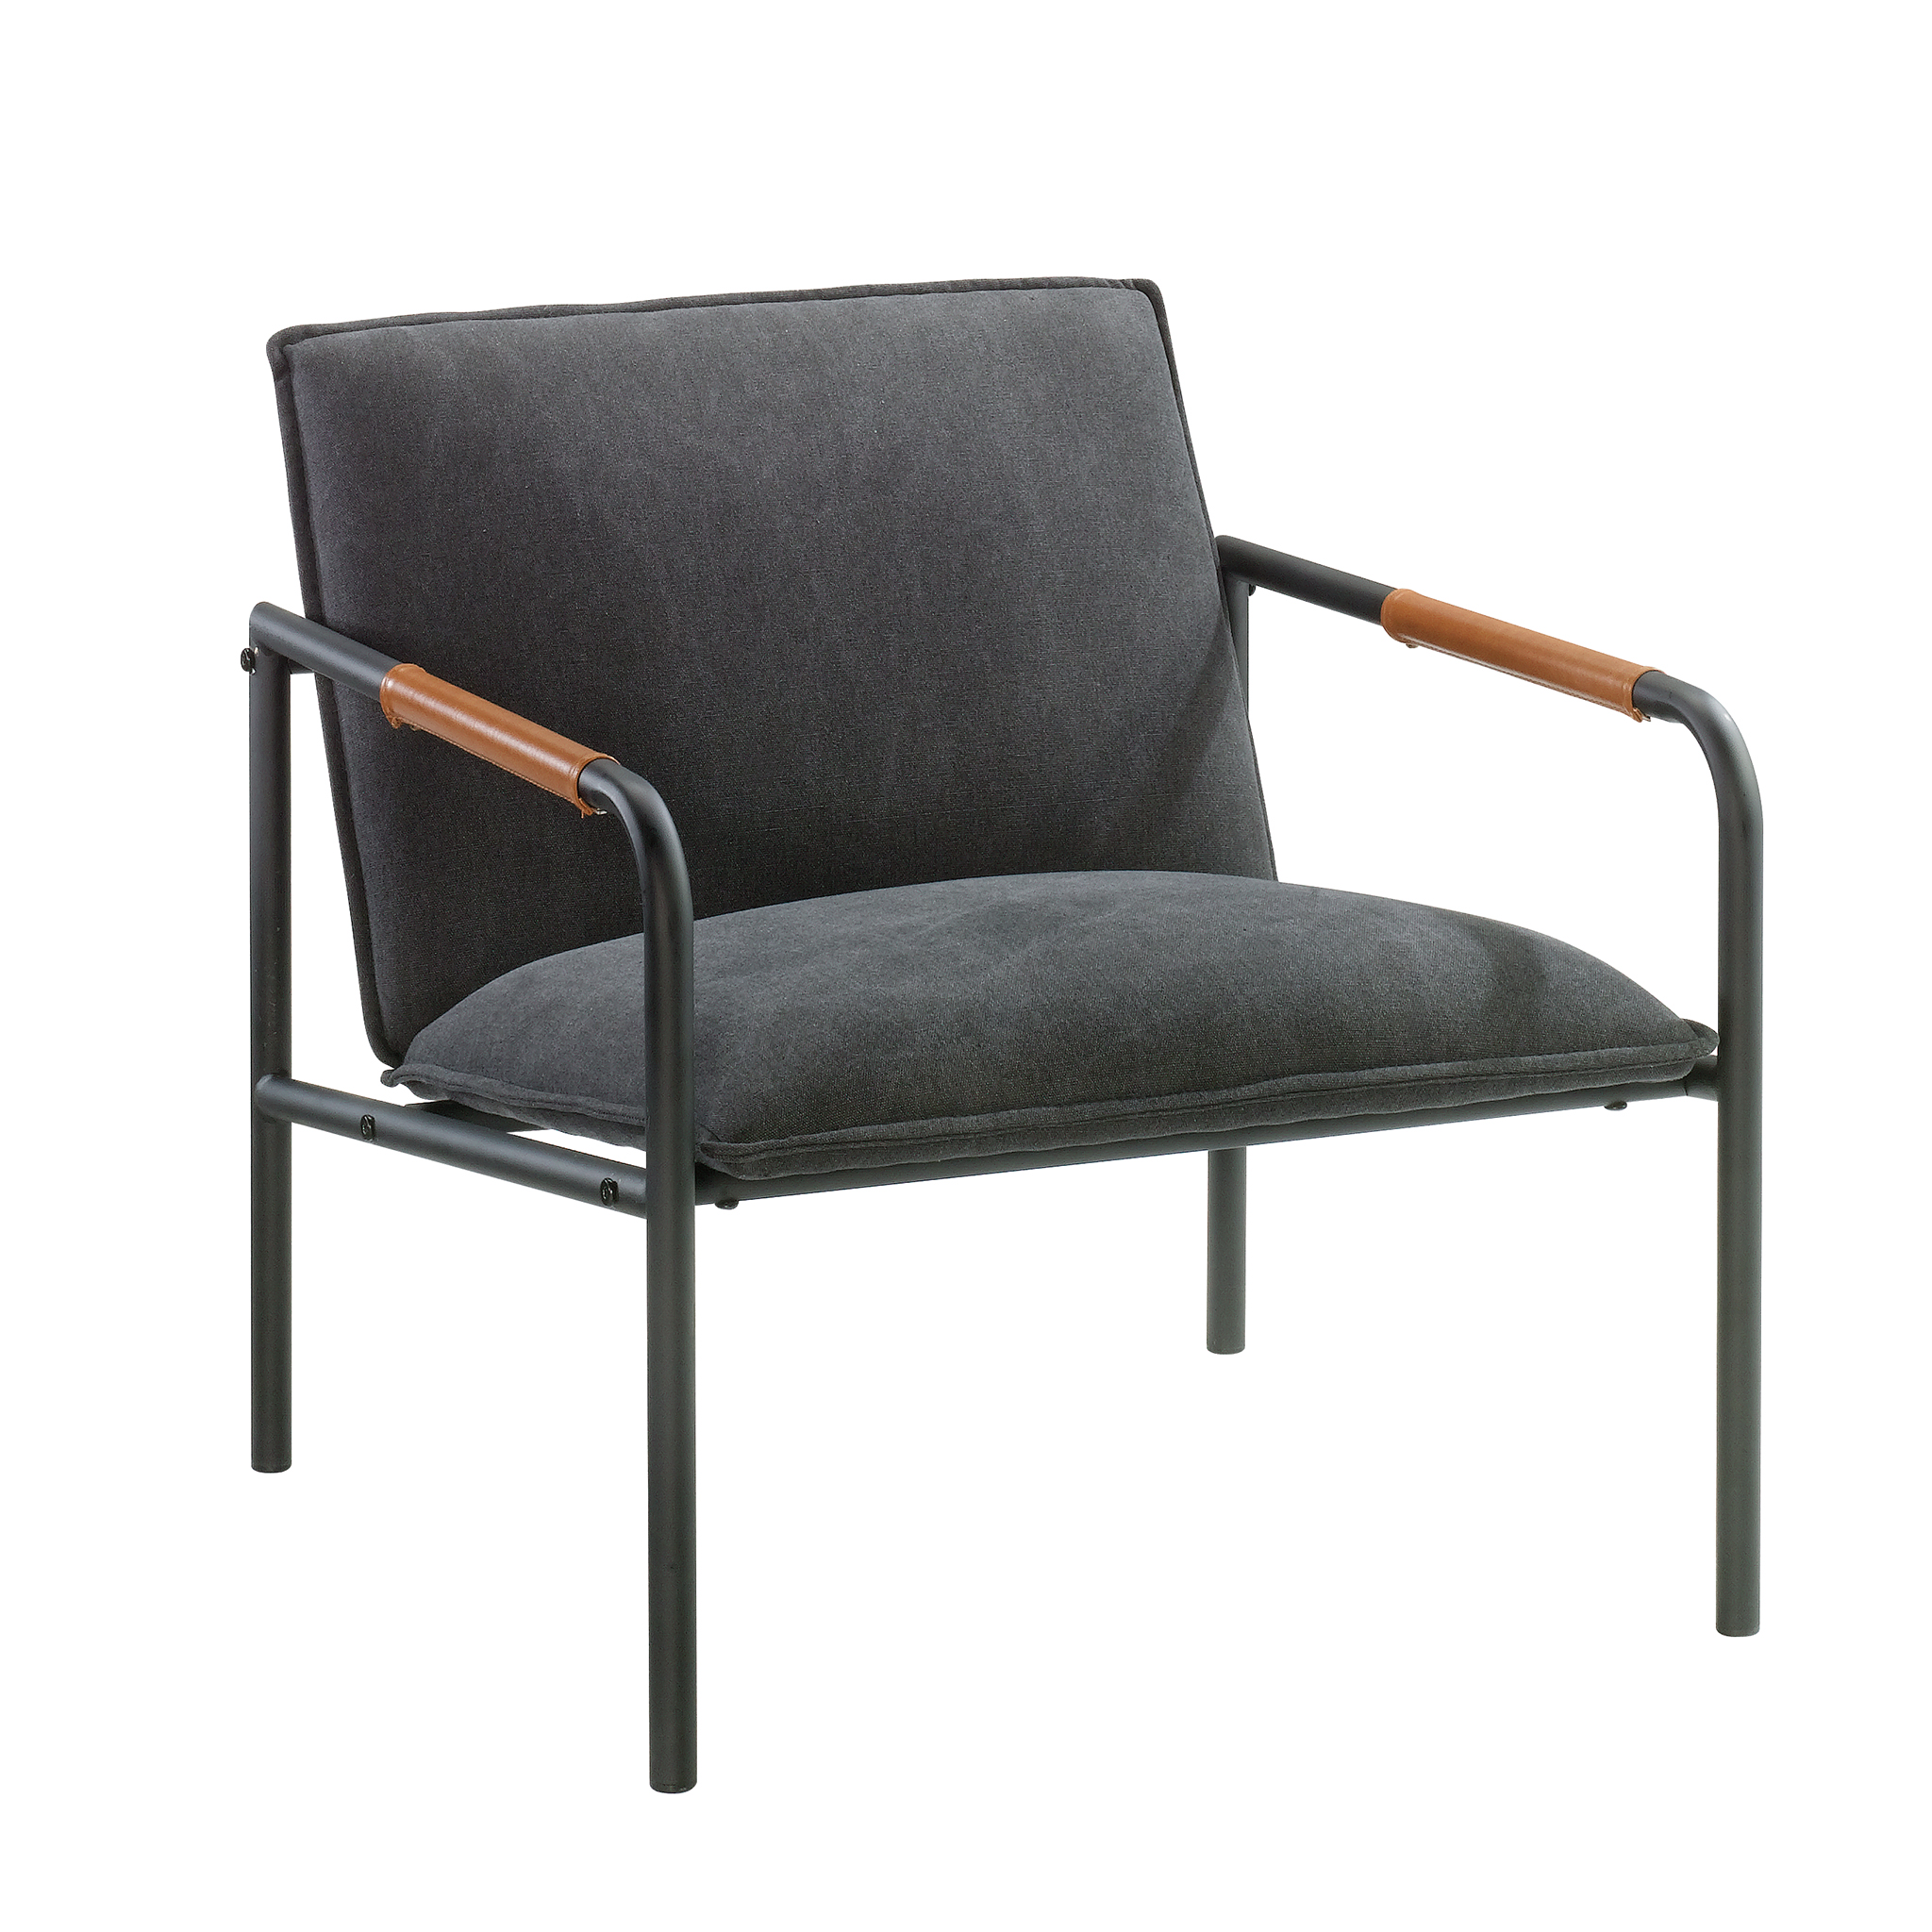 Sauder Boulevard cafe Metal Lounge chair, charcoal gray finish